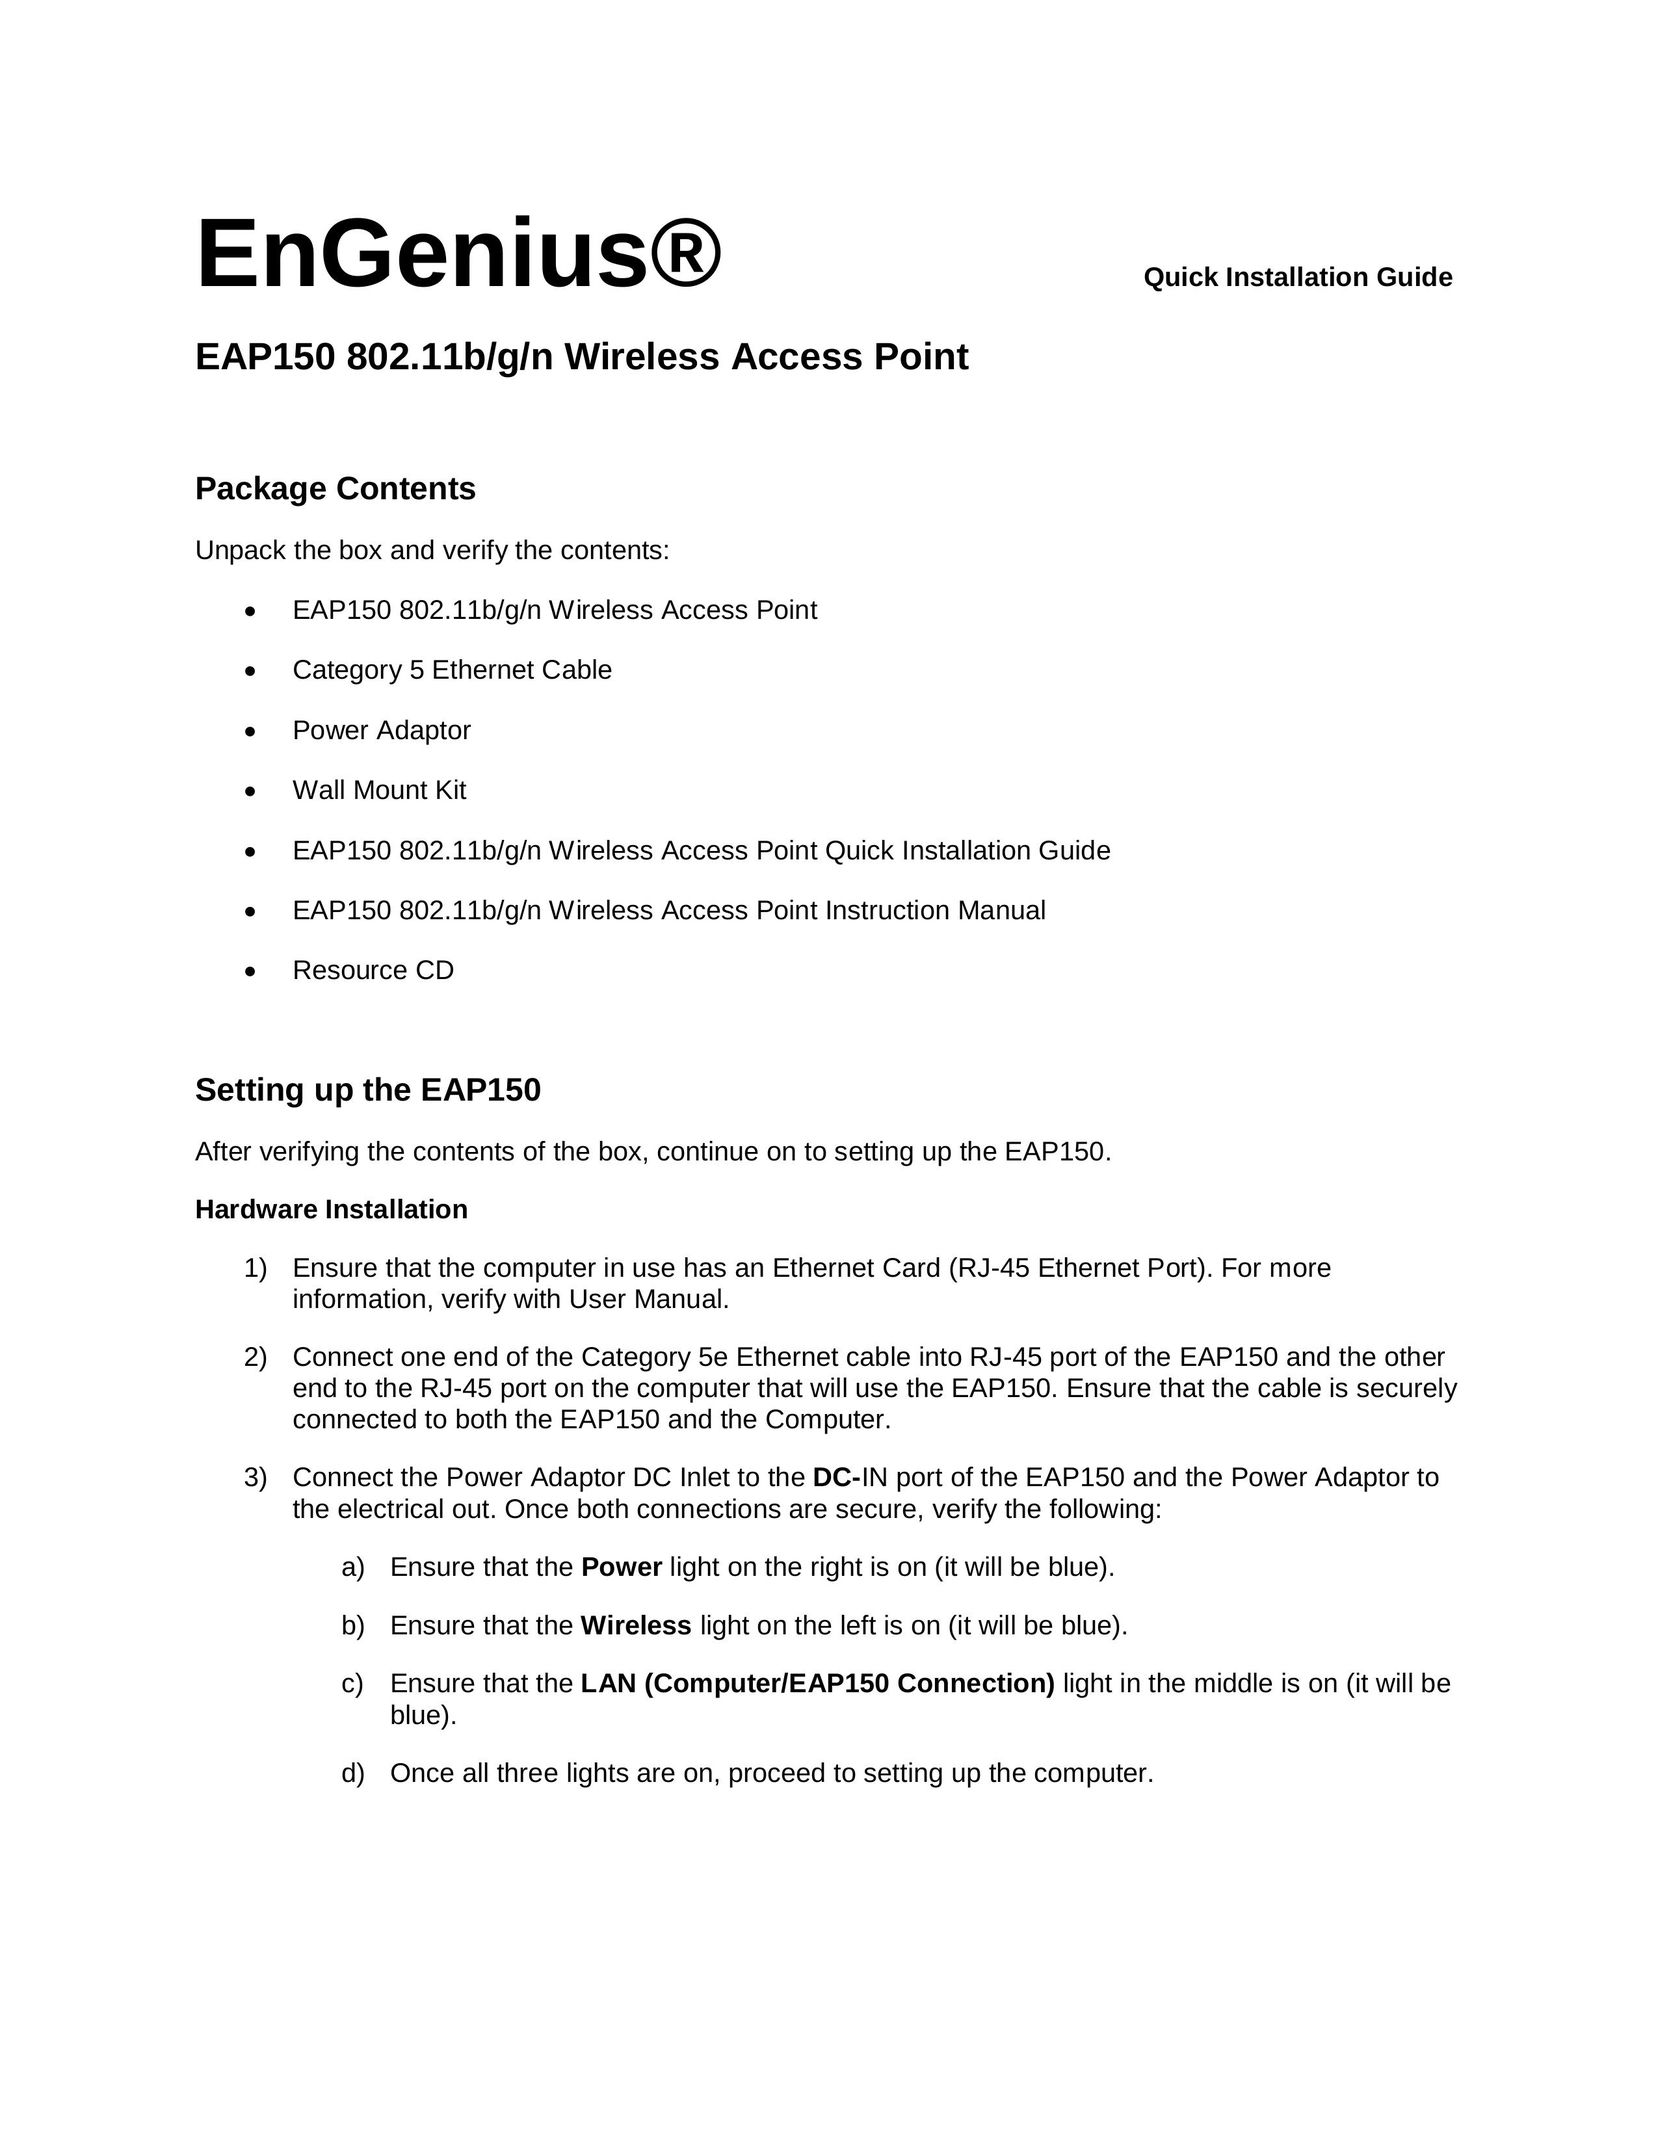 EnGenius Technologies EAP150 Network Router User Manual